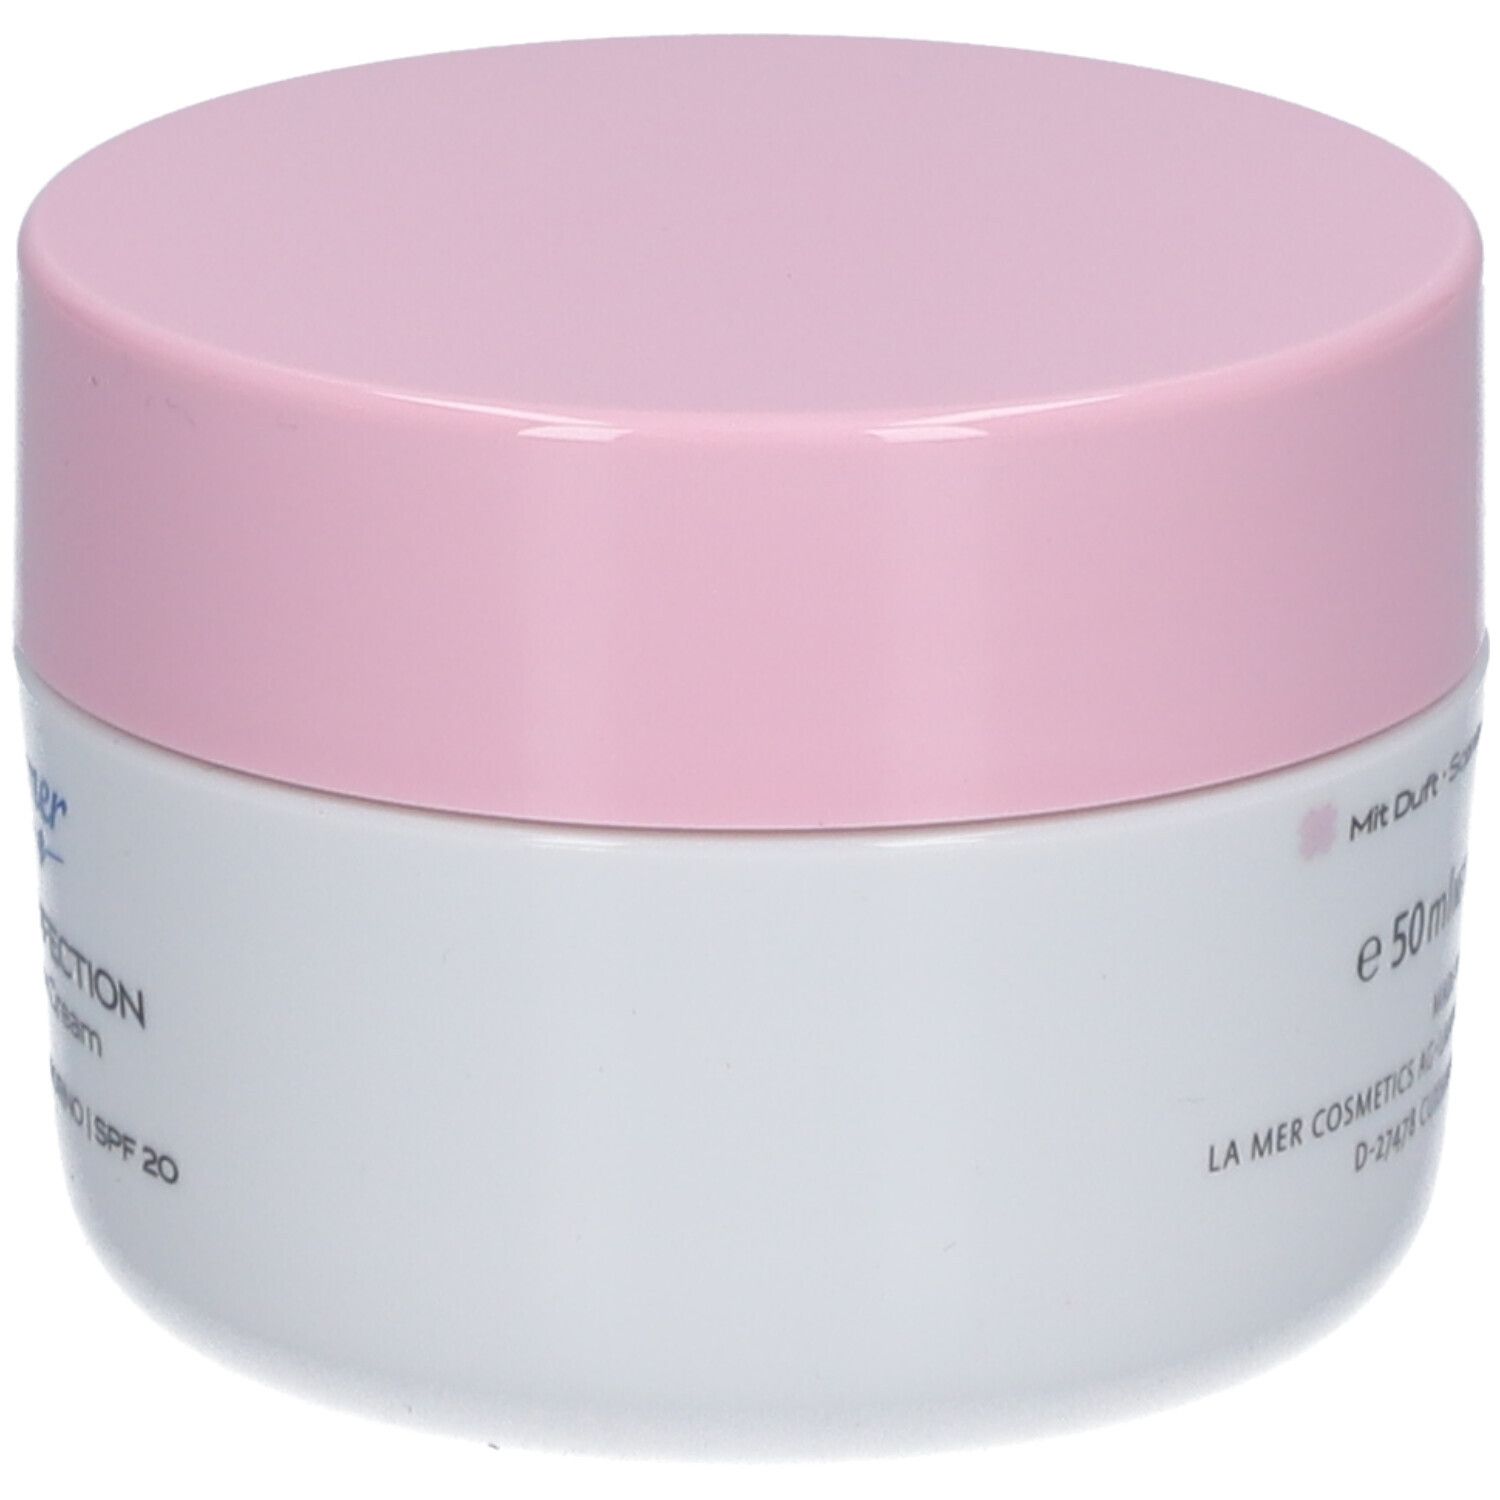 La mer First Perfection Pure Glow Cream Tagescreme LSF 20 parfümiert